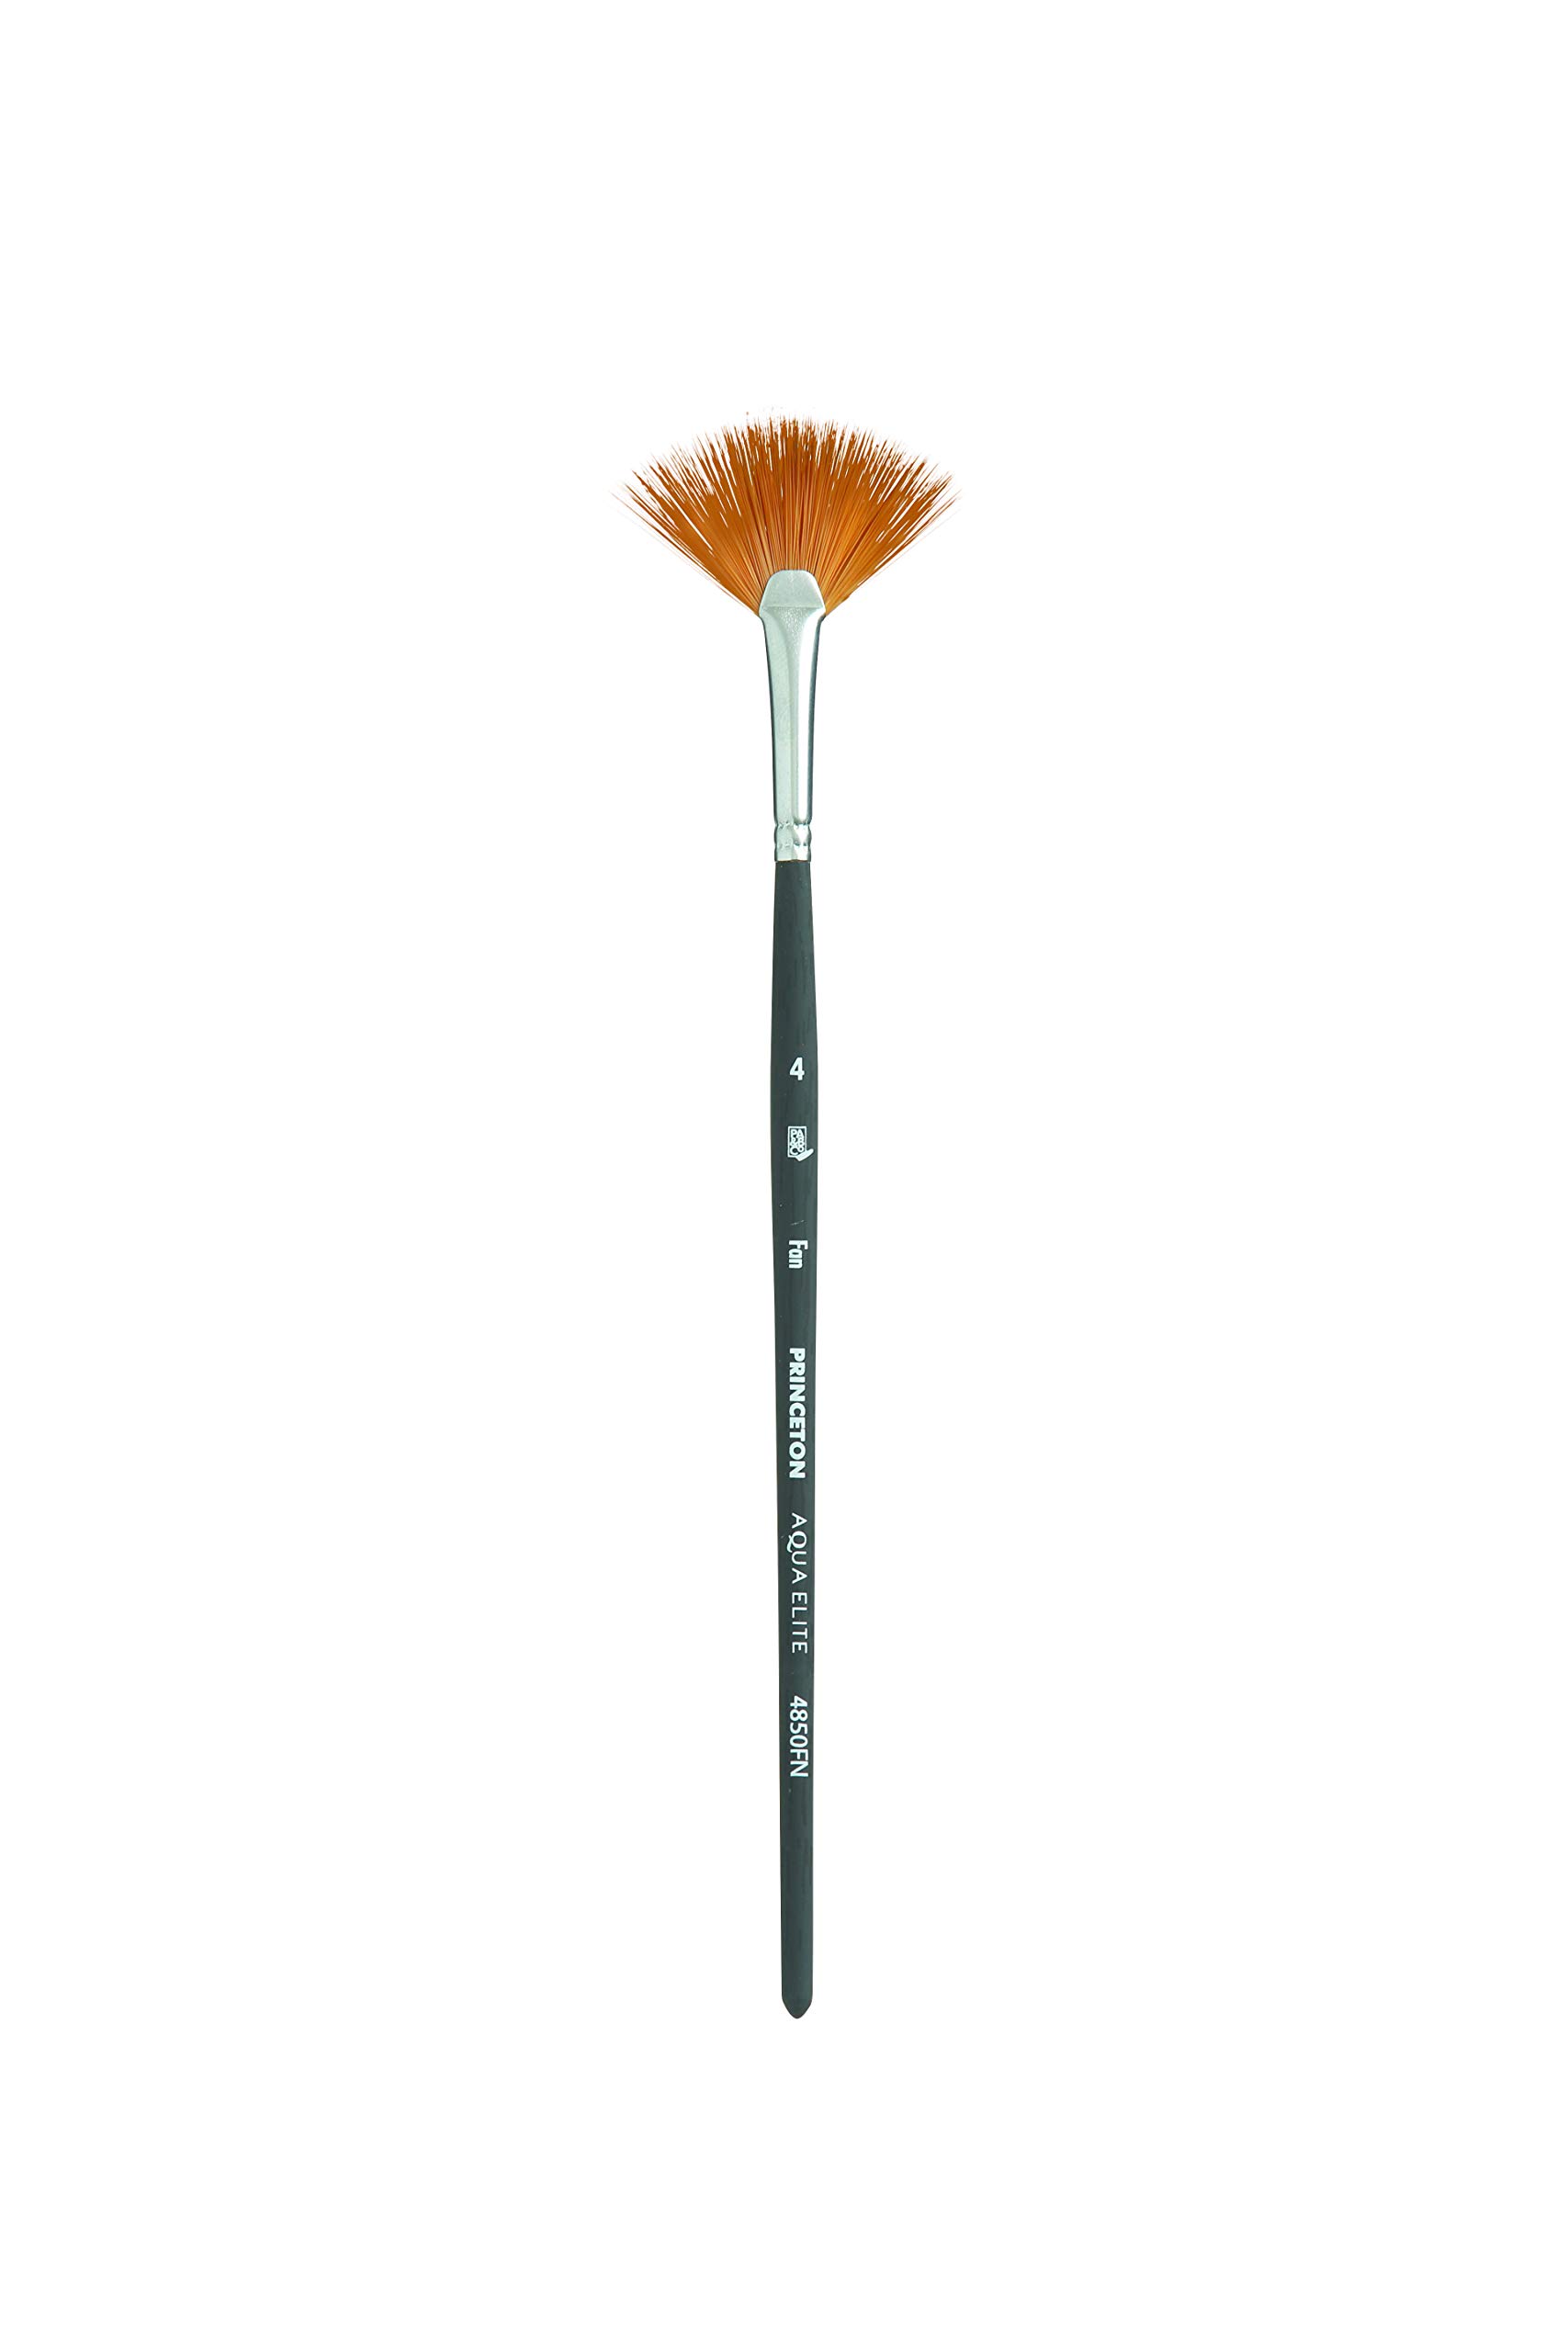 Princeton Aqua Elite Series 4850 Synthetic Kolinsky Sable Brushes